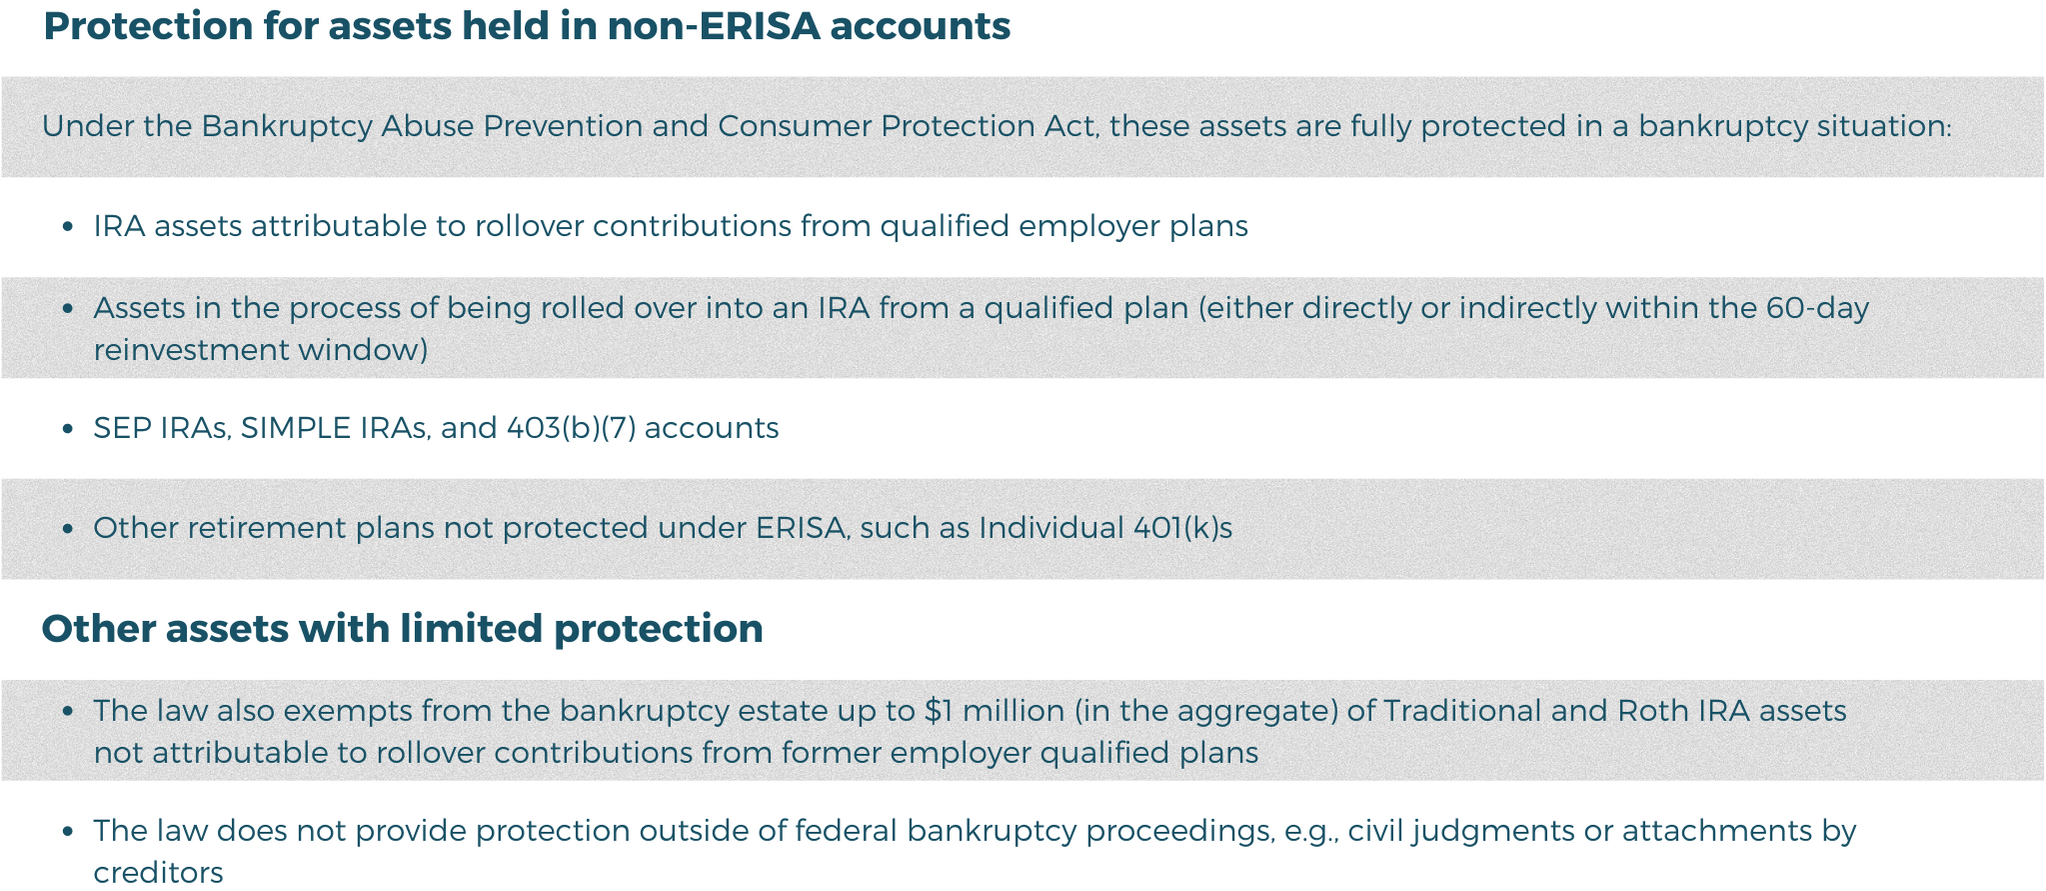 protection for non-erisa accounts